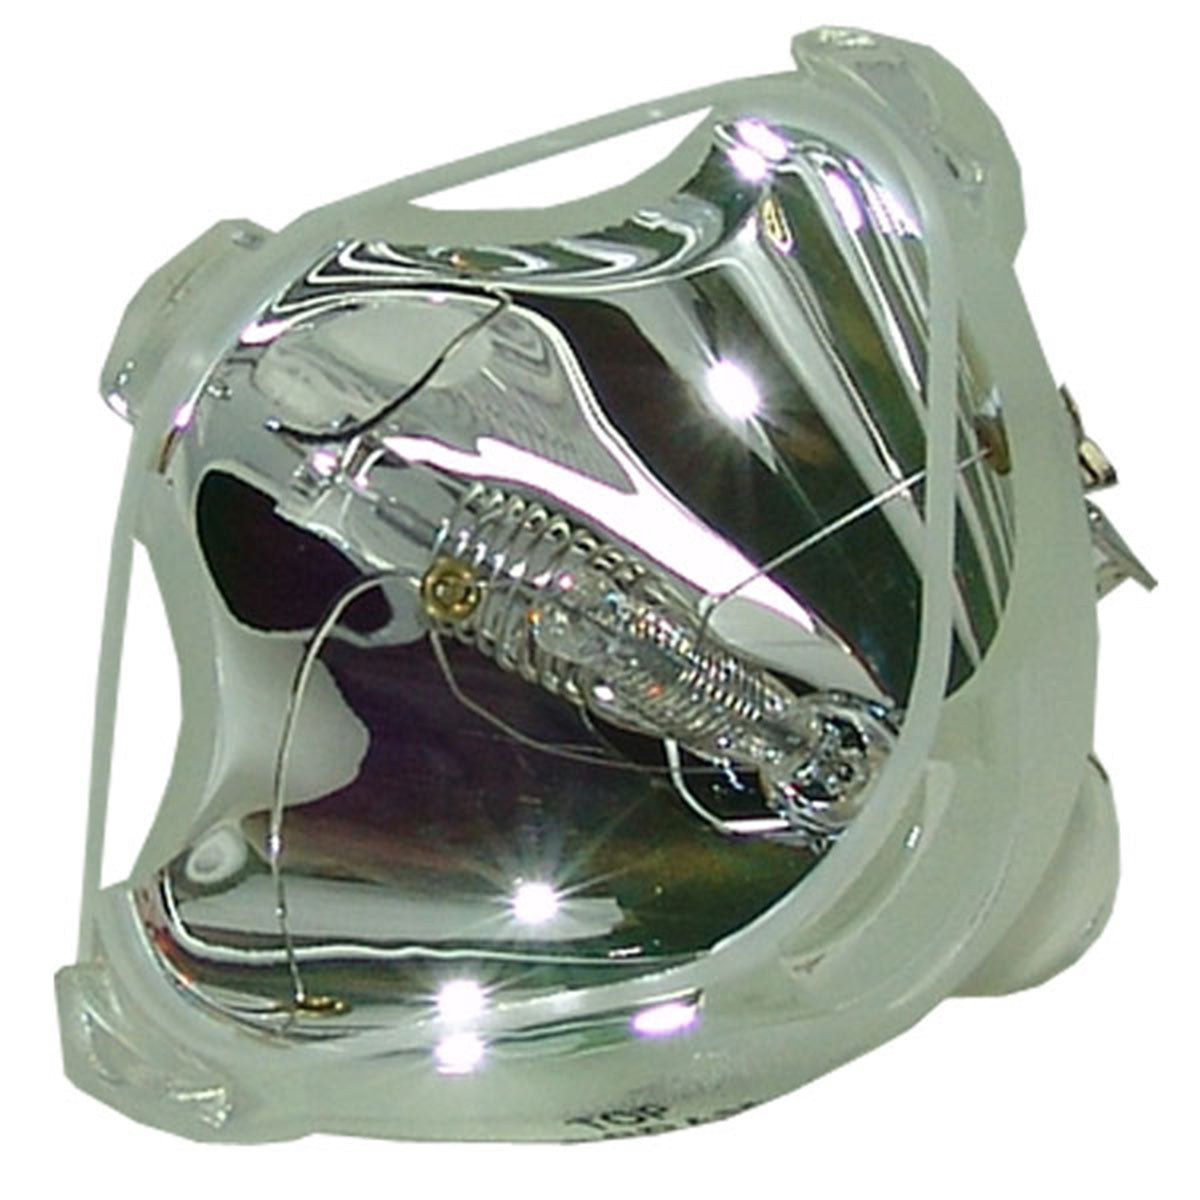 Projector Europe LAMP-026 Osram Projector Bare Lamp